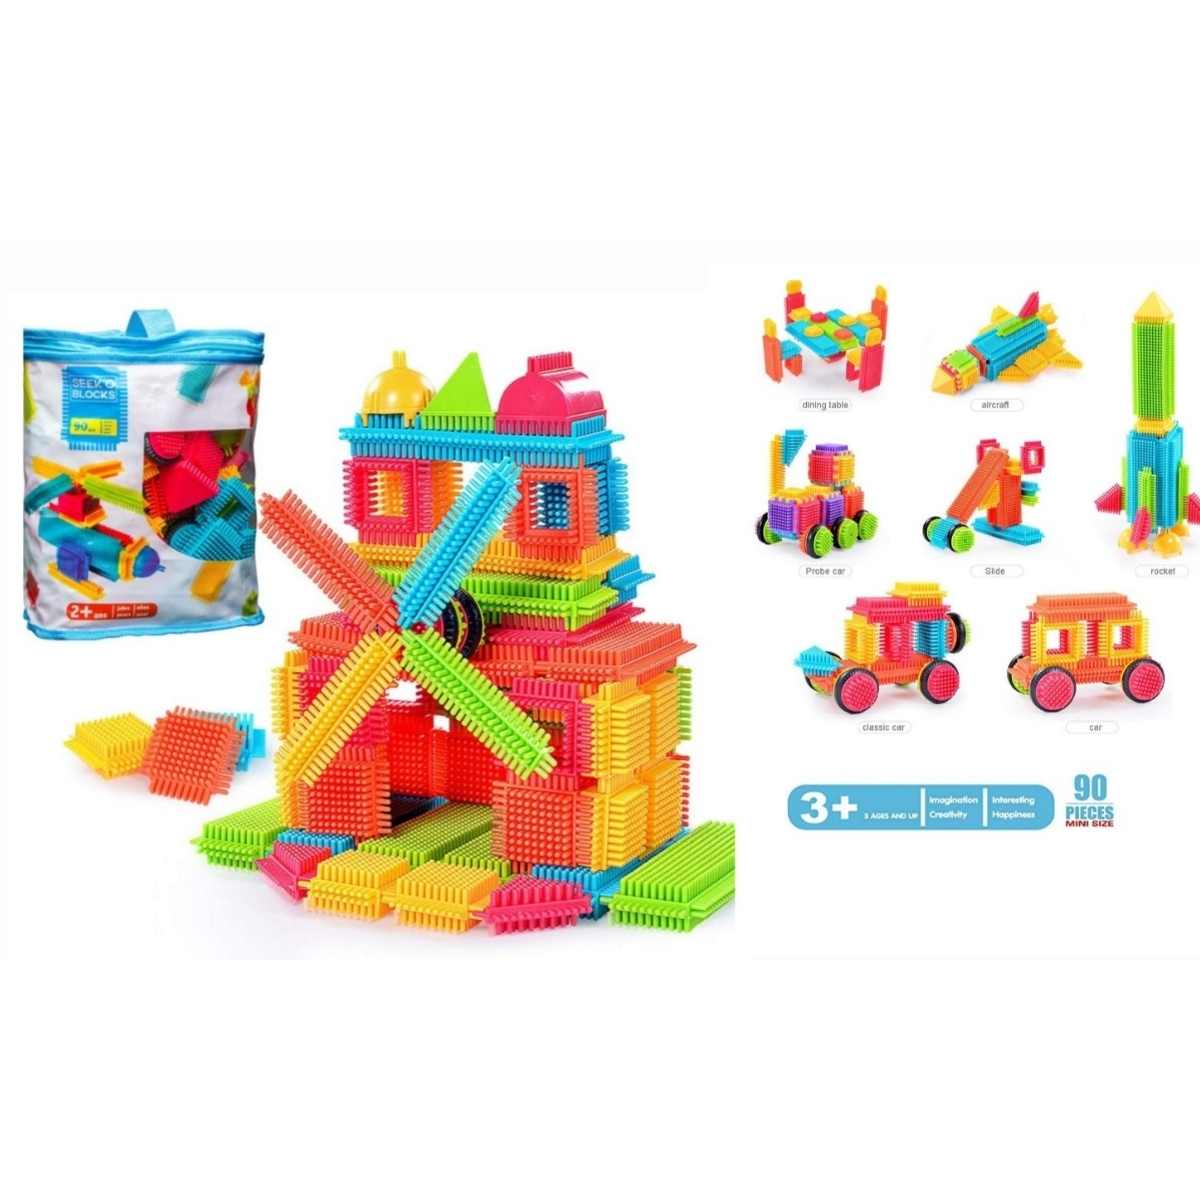 Godr7oy bristle shape building toys